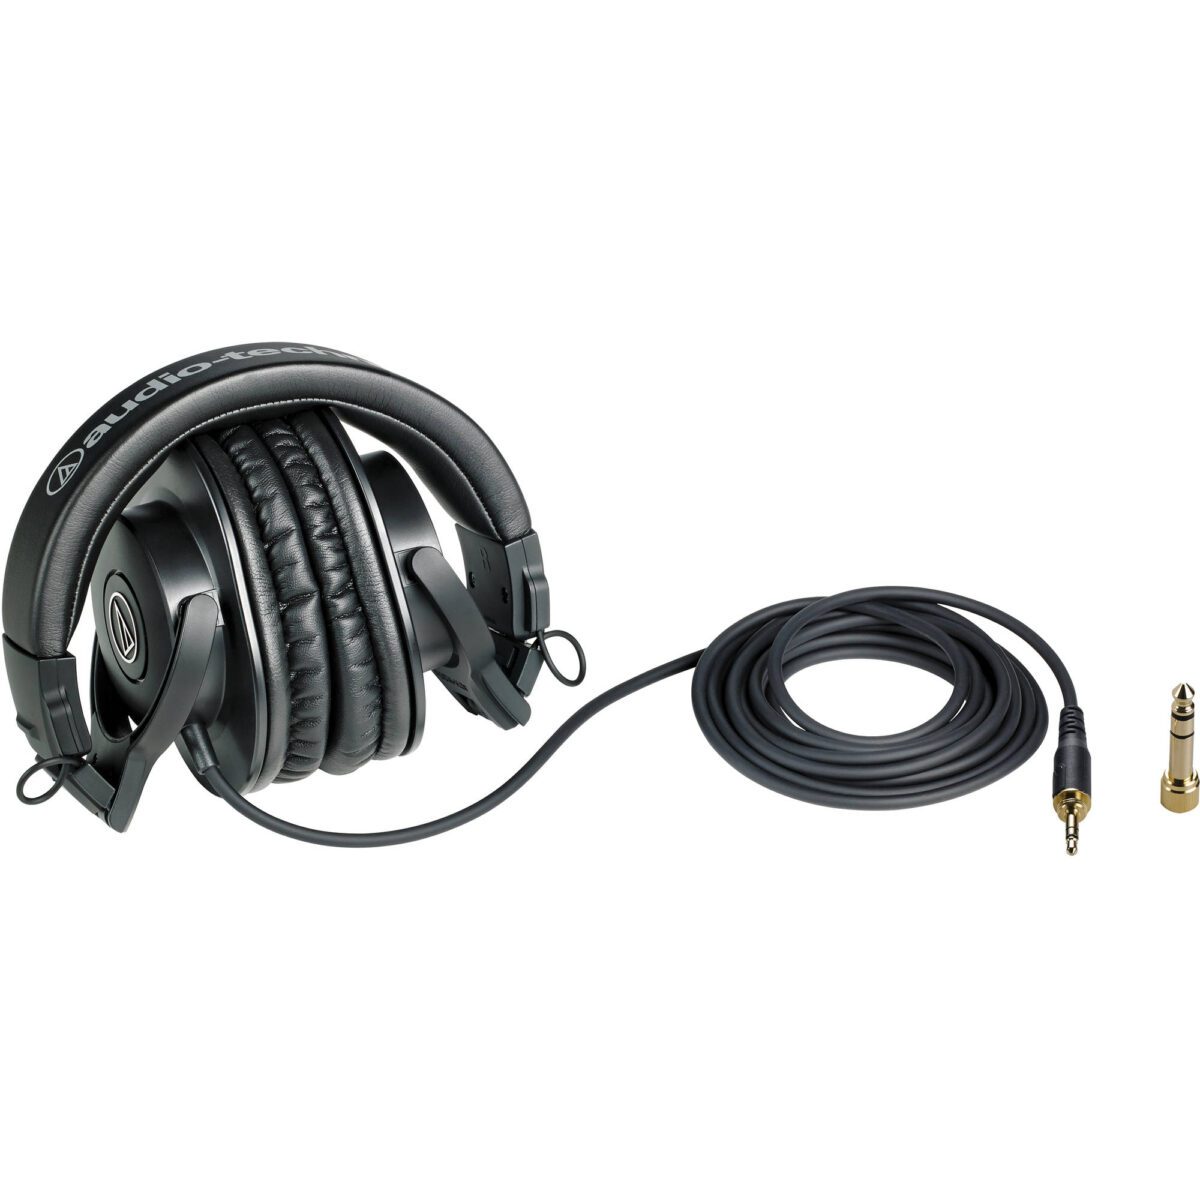 Audio-Technica ATH-M30x Closed-Back Monitor Headphones (Black)